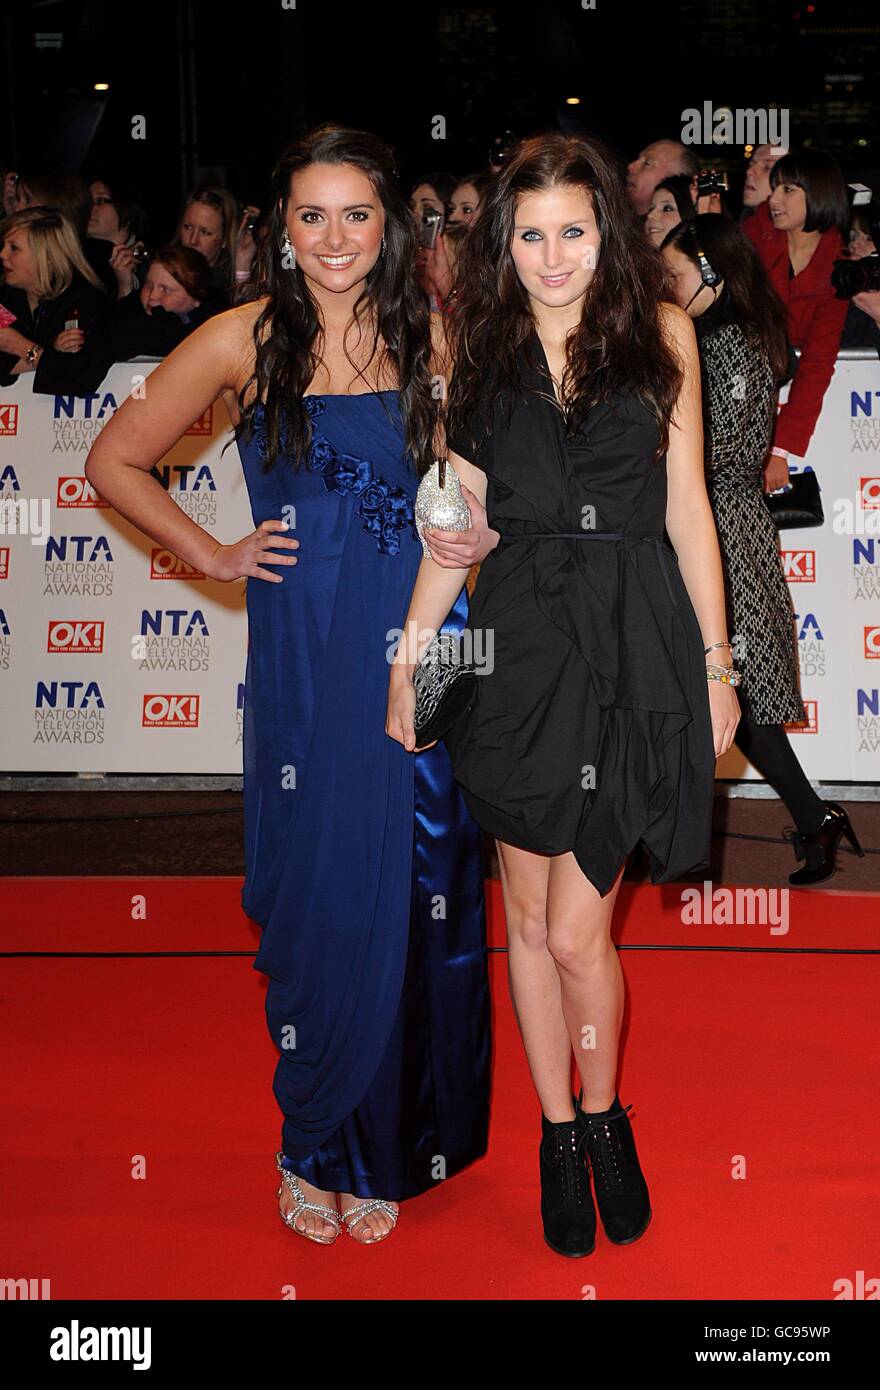 National Television Awards 2010 - Arrivals - London Stock Photo